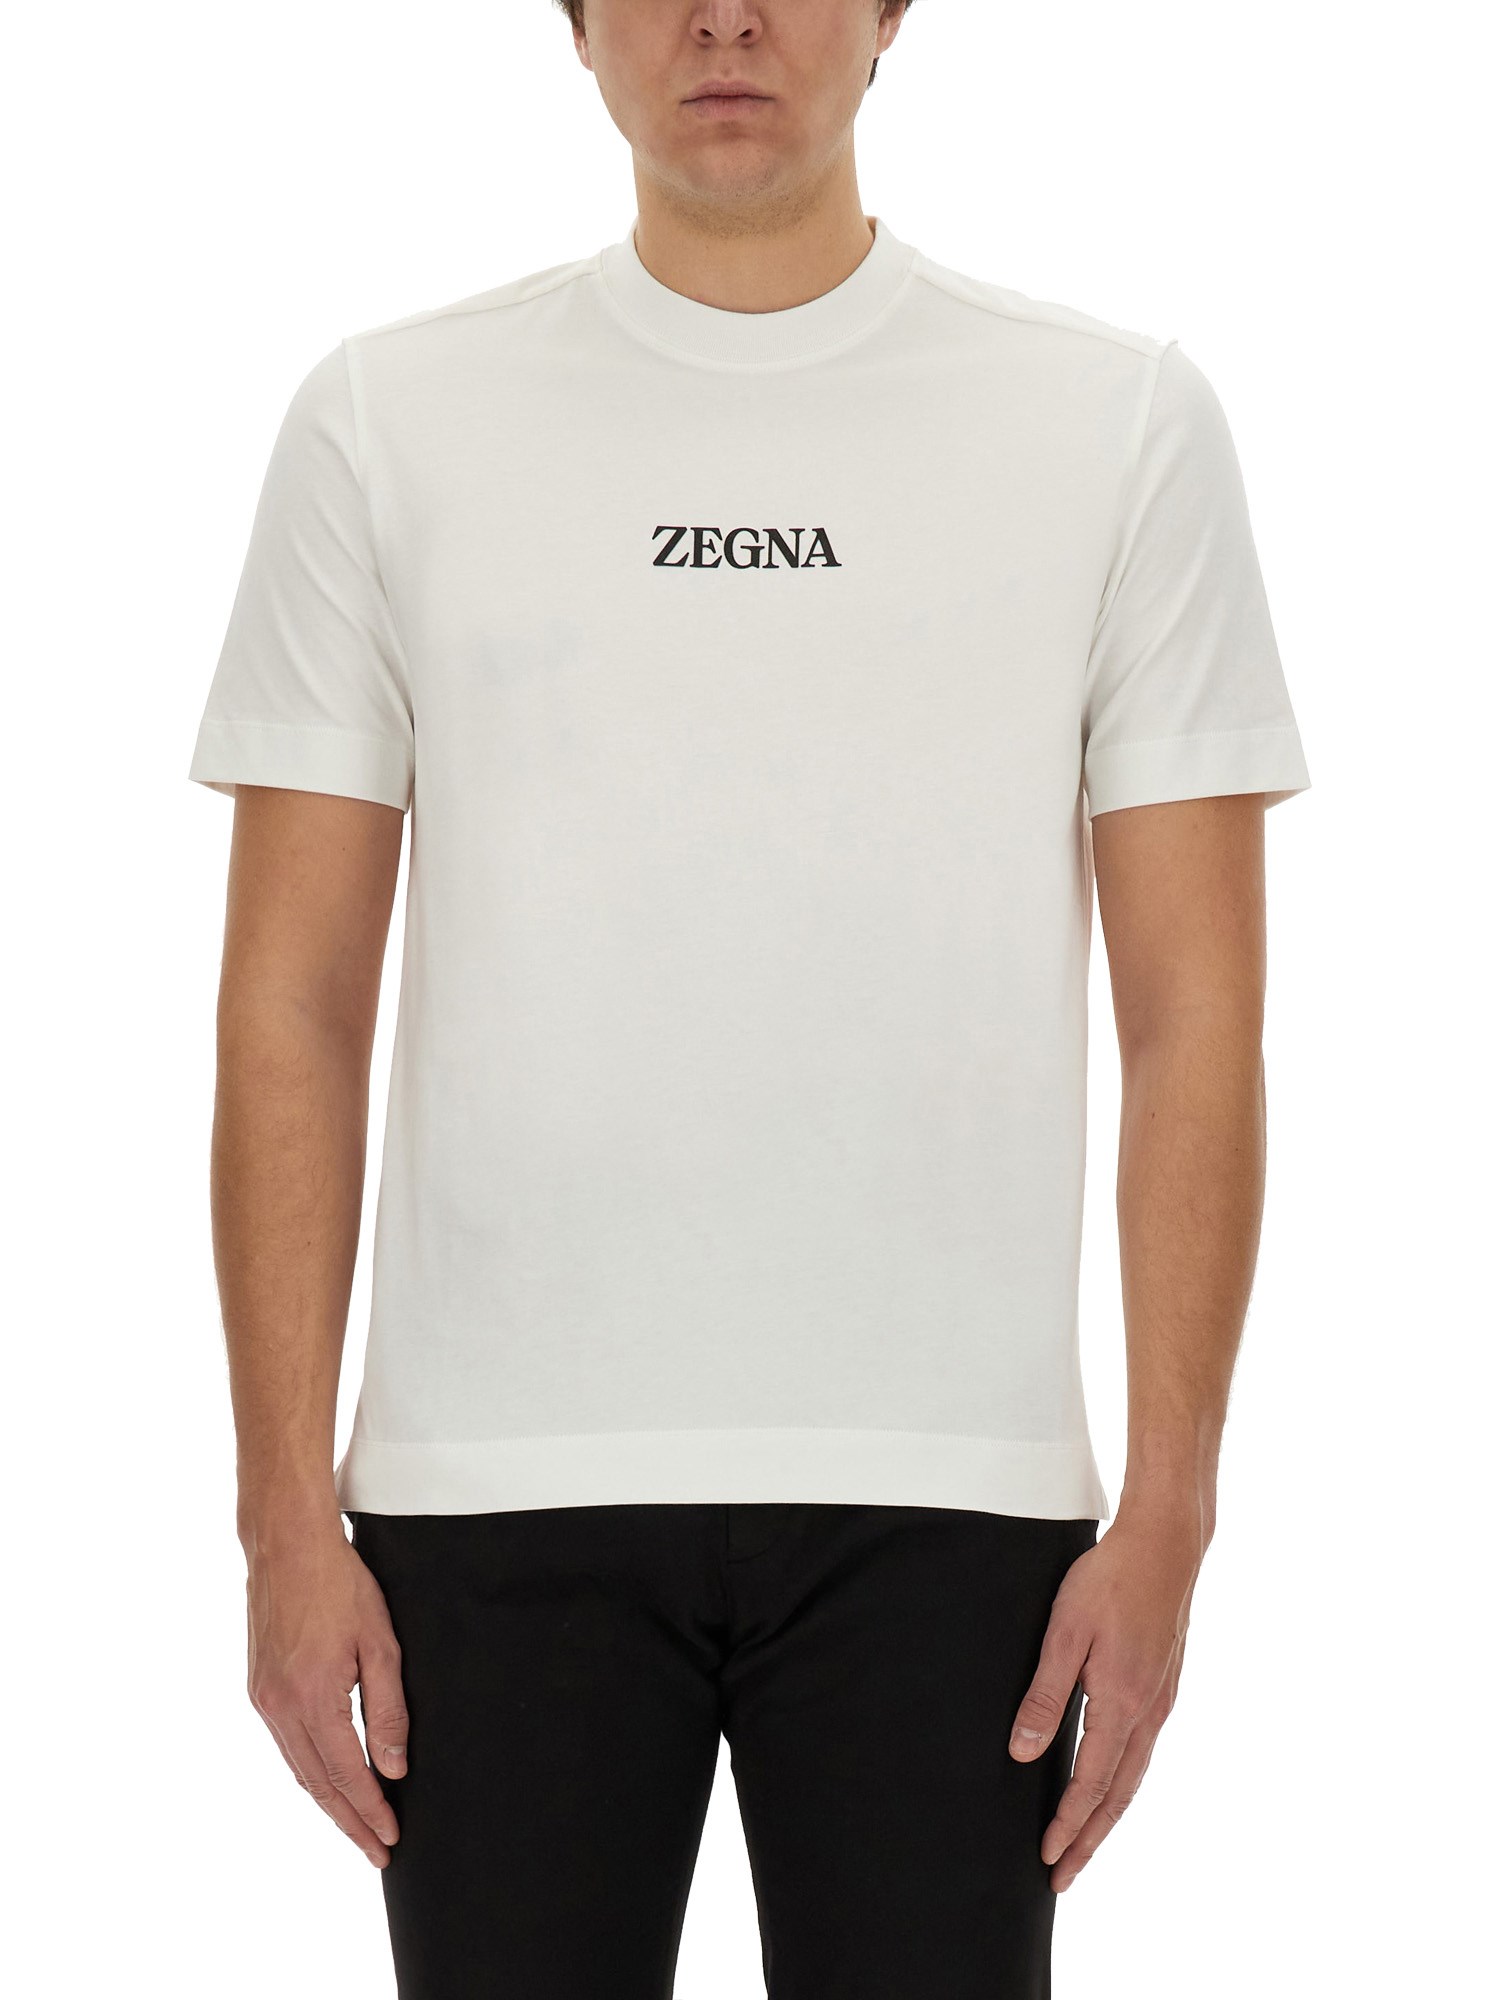 zegna t-shirt with logo